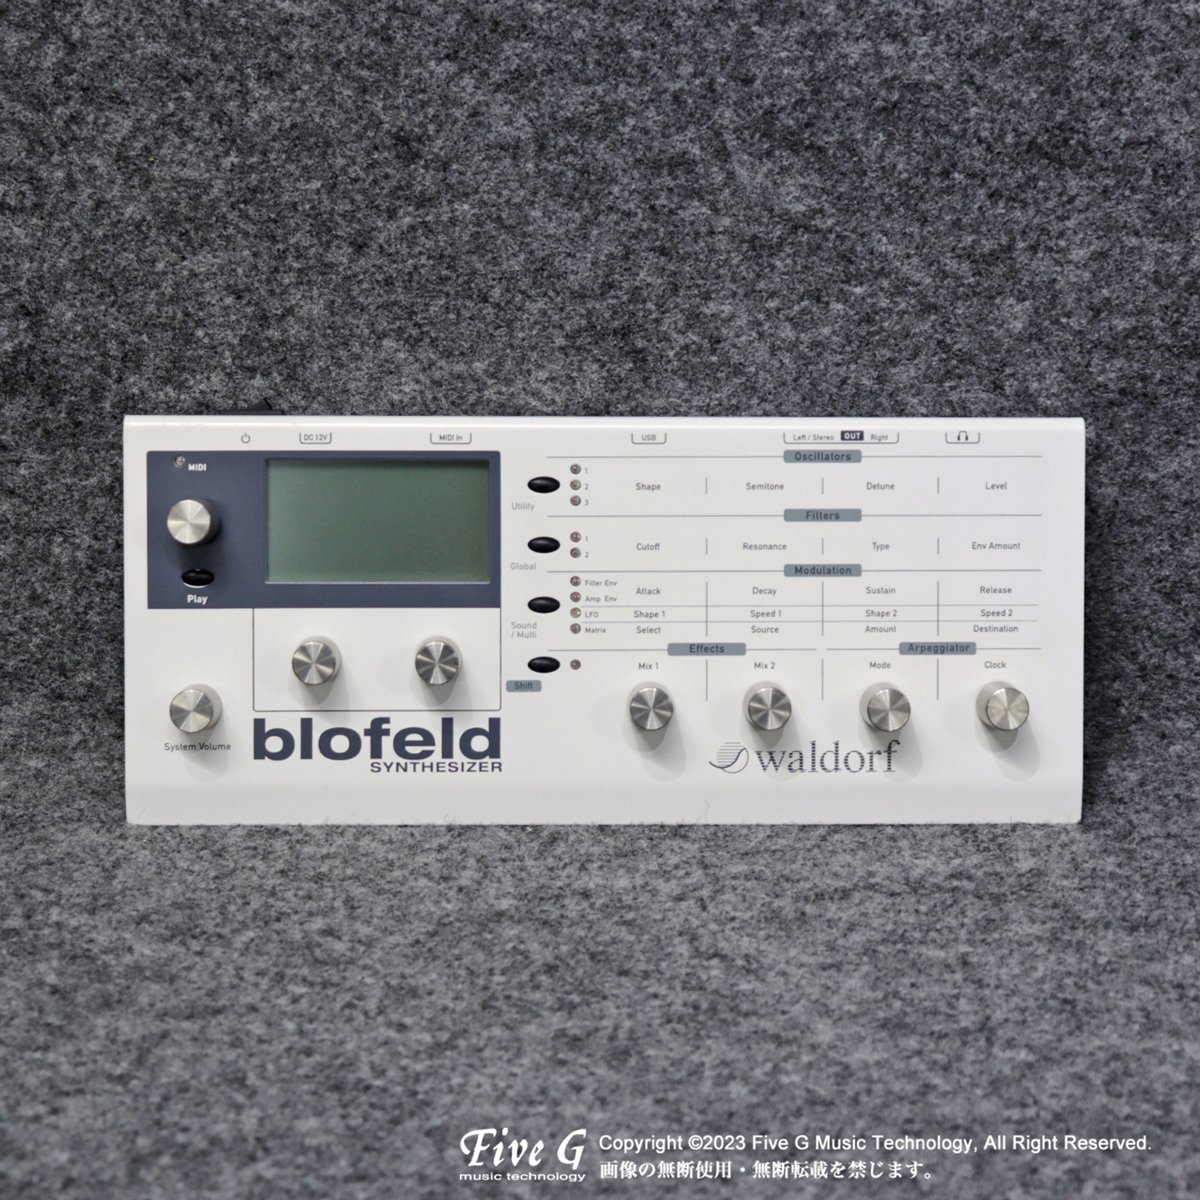 Waldorf | Blofeld Desktop White | 中古 - Used - 音源モジュール